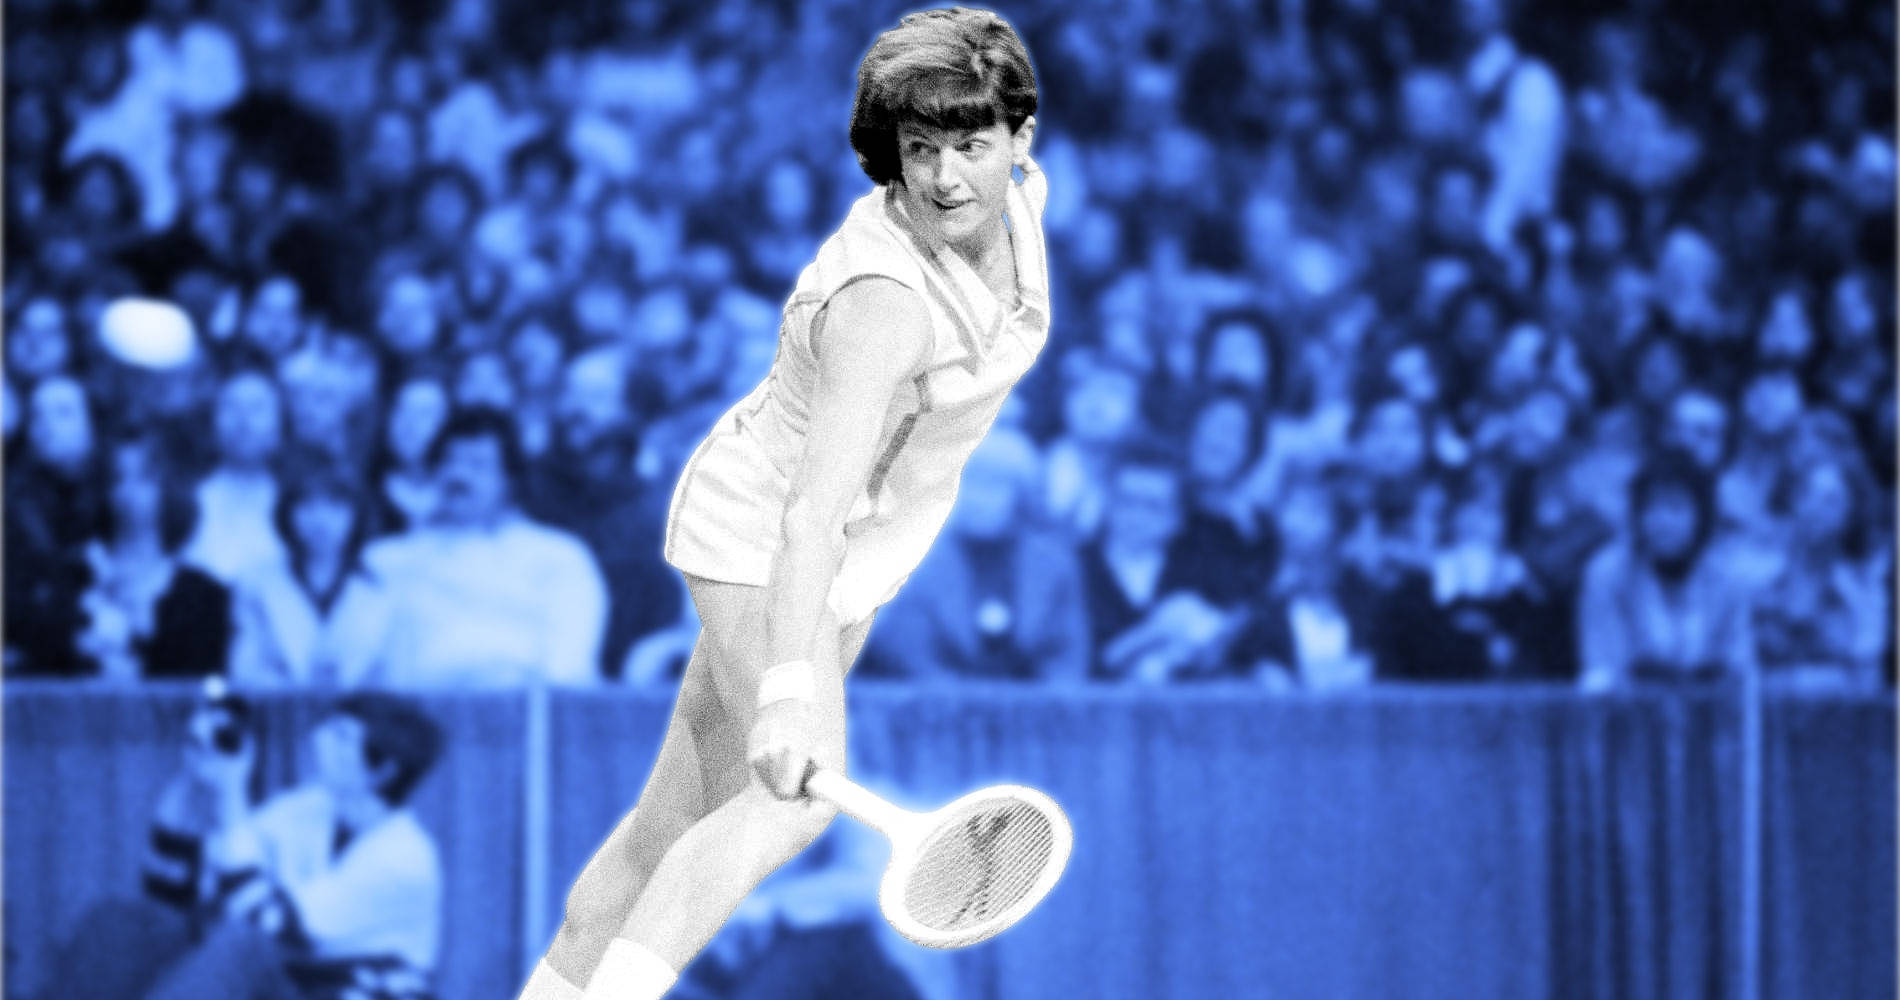 Australian Tennis Legend Margaret Court in Action at the Australian Open in the 1970s Wallpaper